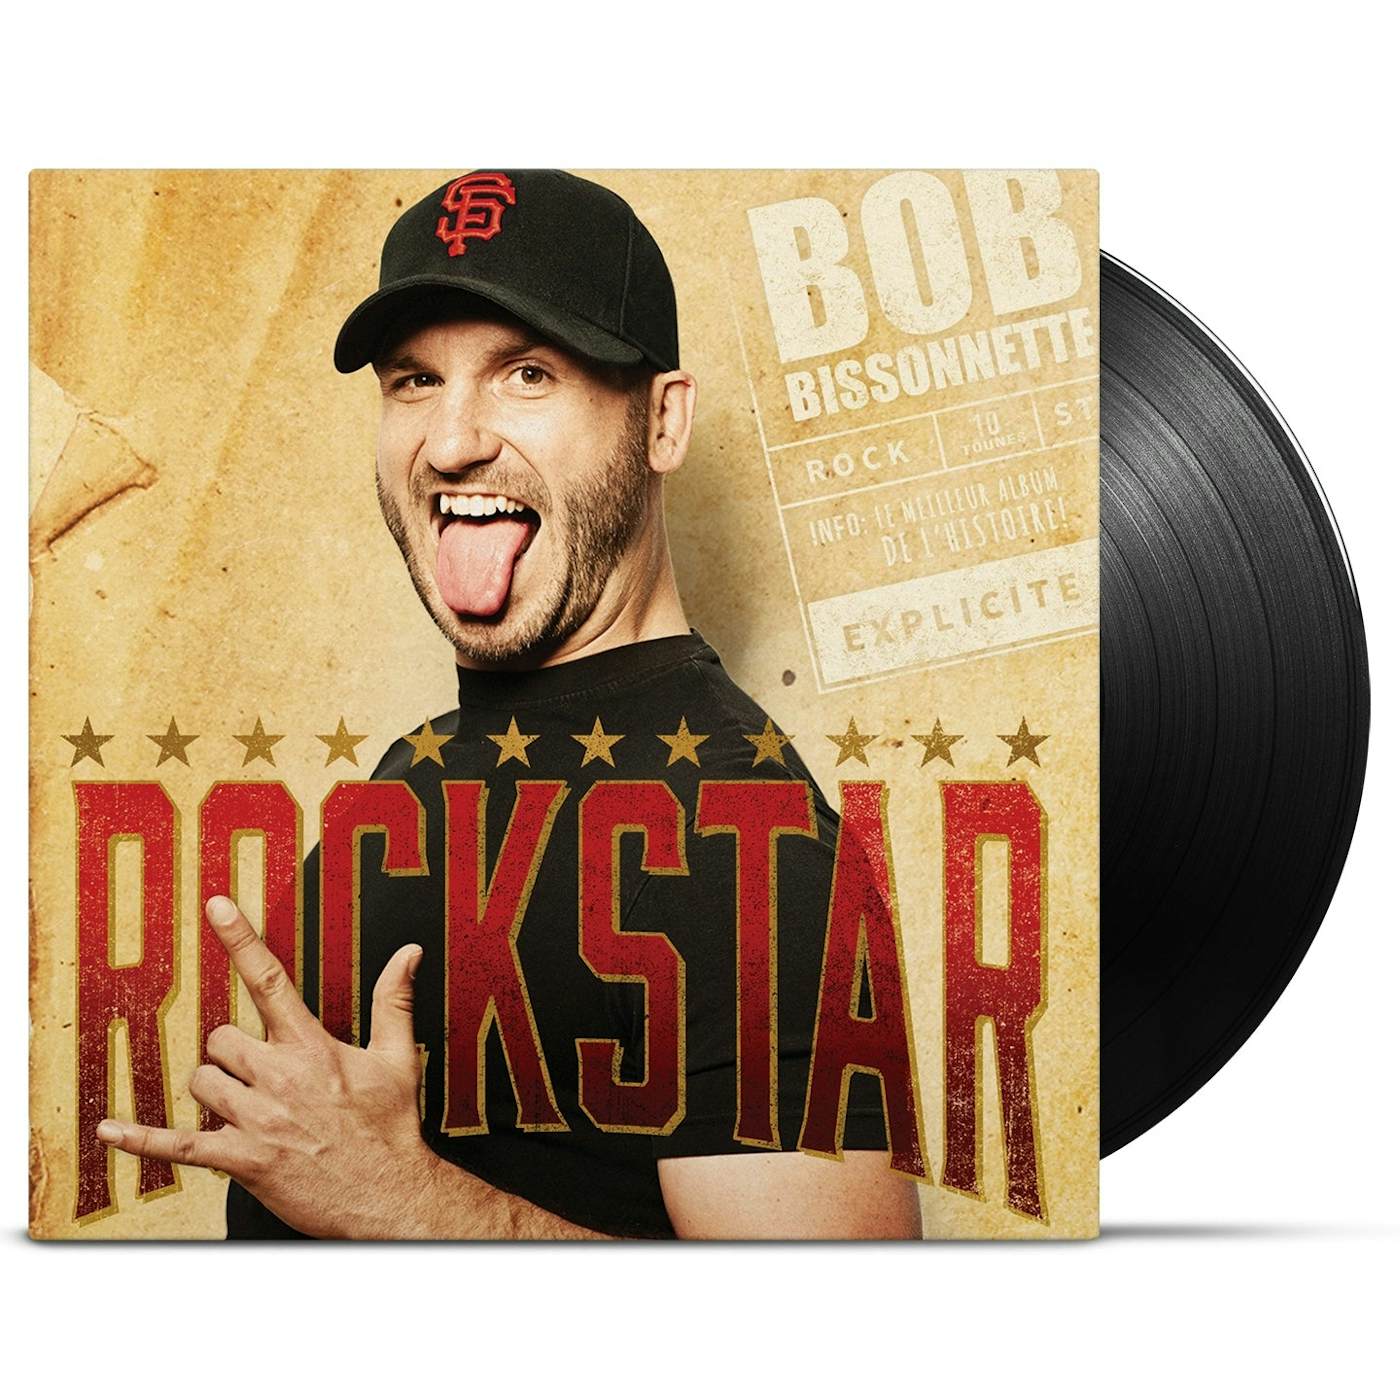 Bob Bissonnette / Rockstar - LP Vinyl